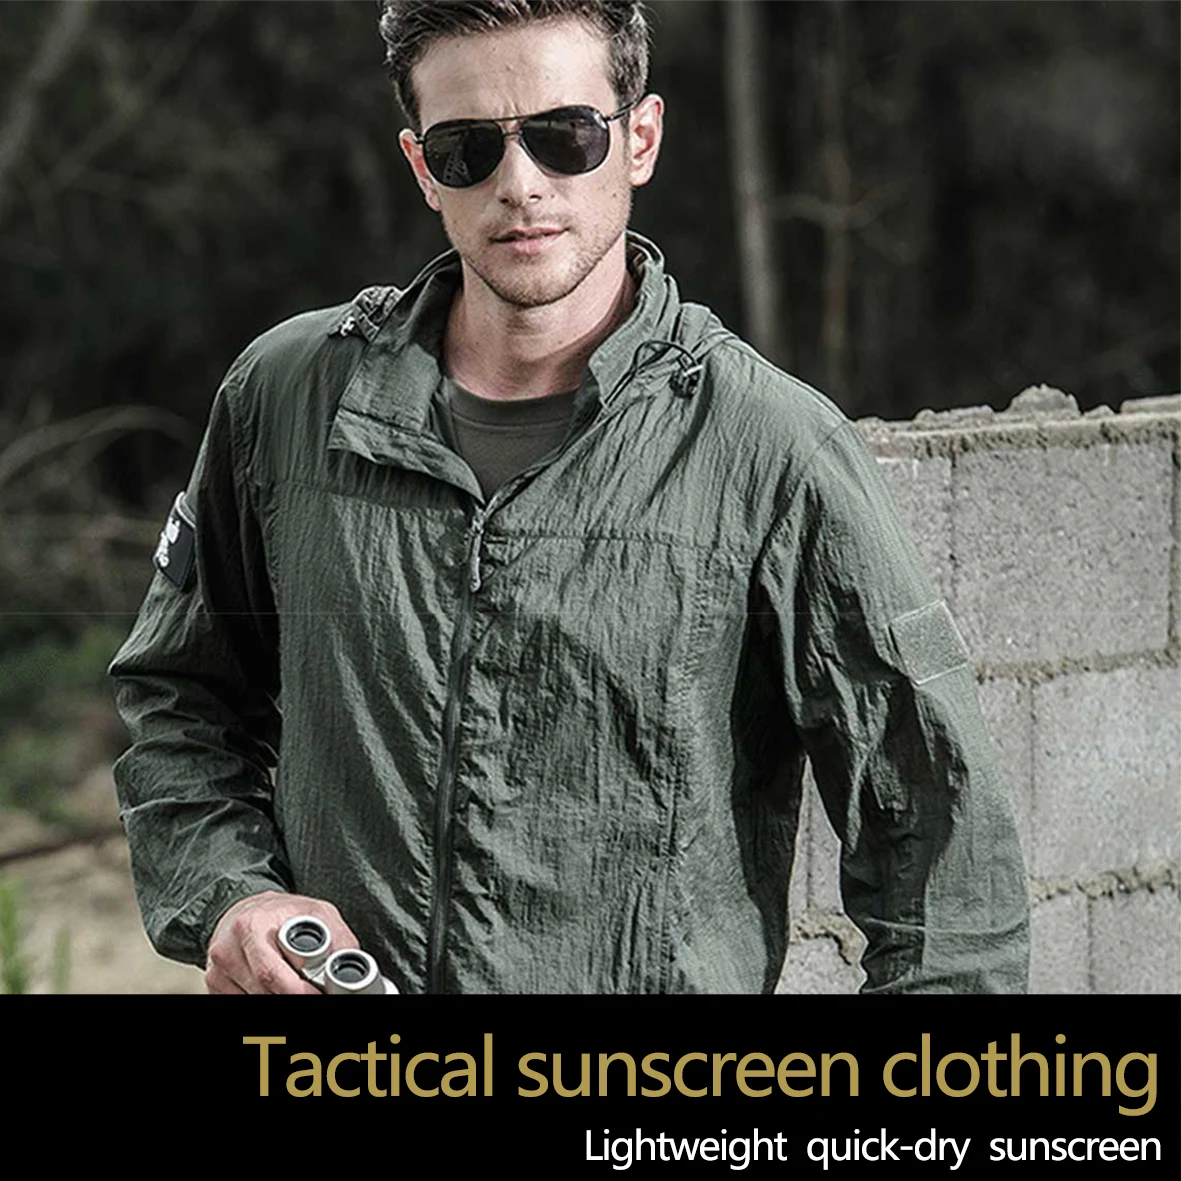 

DMGear Spring and autumn sunscreen breathable light skin coat rainy day outdoor tactics WARGAME sportswear